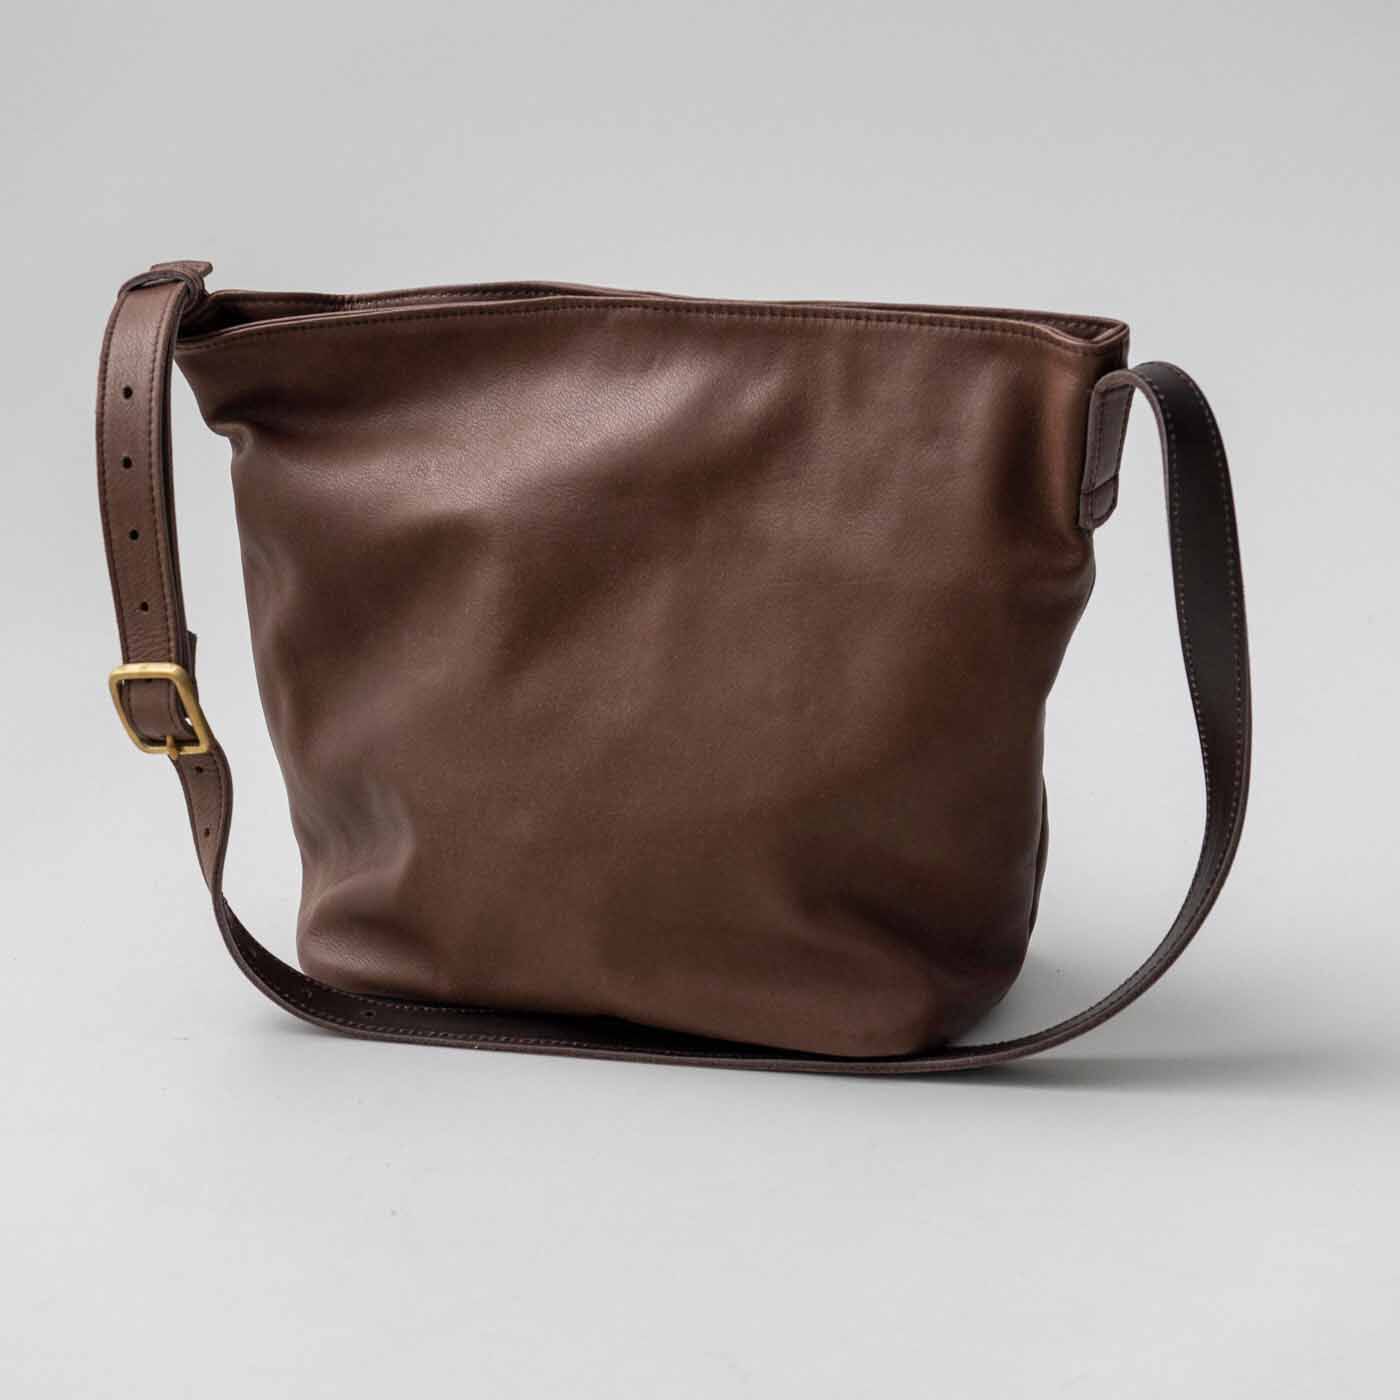 ＆Stories|福岡の鞄作家と作った 職人本革のエトランドルバッグ〈ダークブラウン〉|革の質感を生かすため、デザインはとことんミニマム。